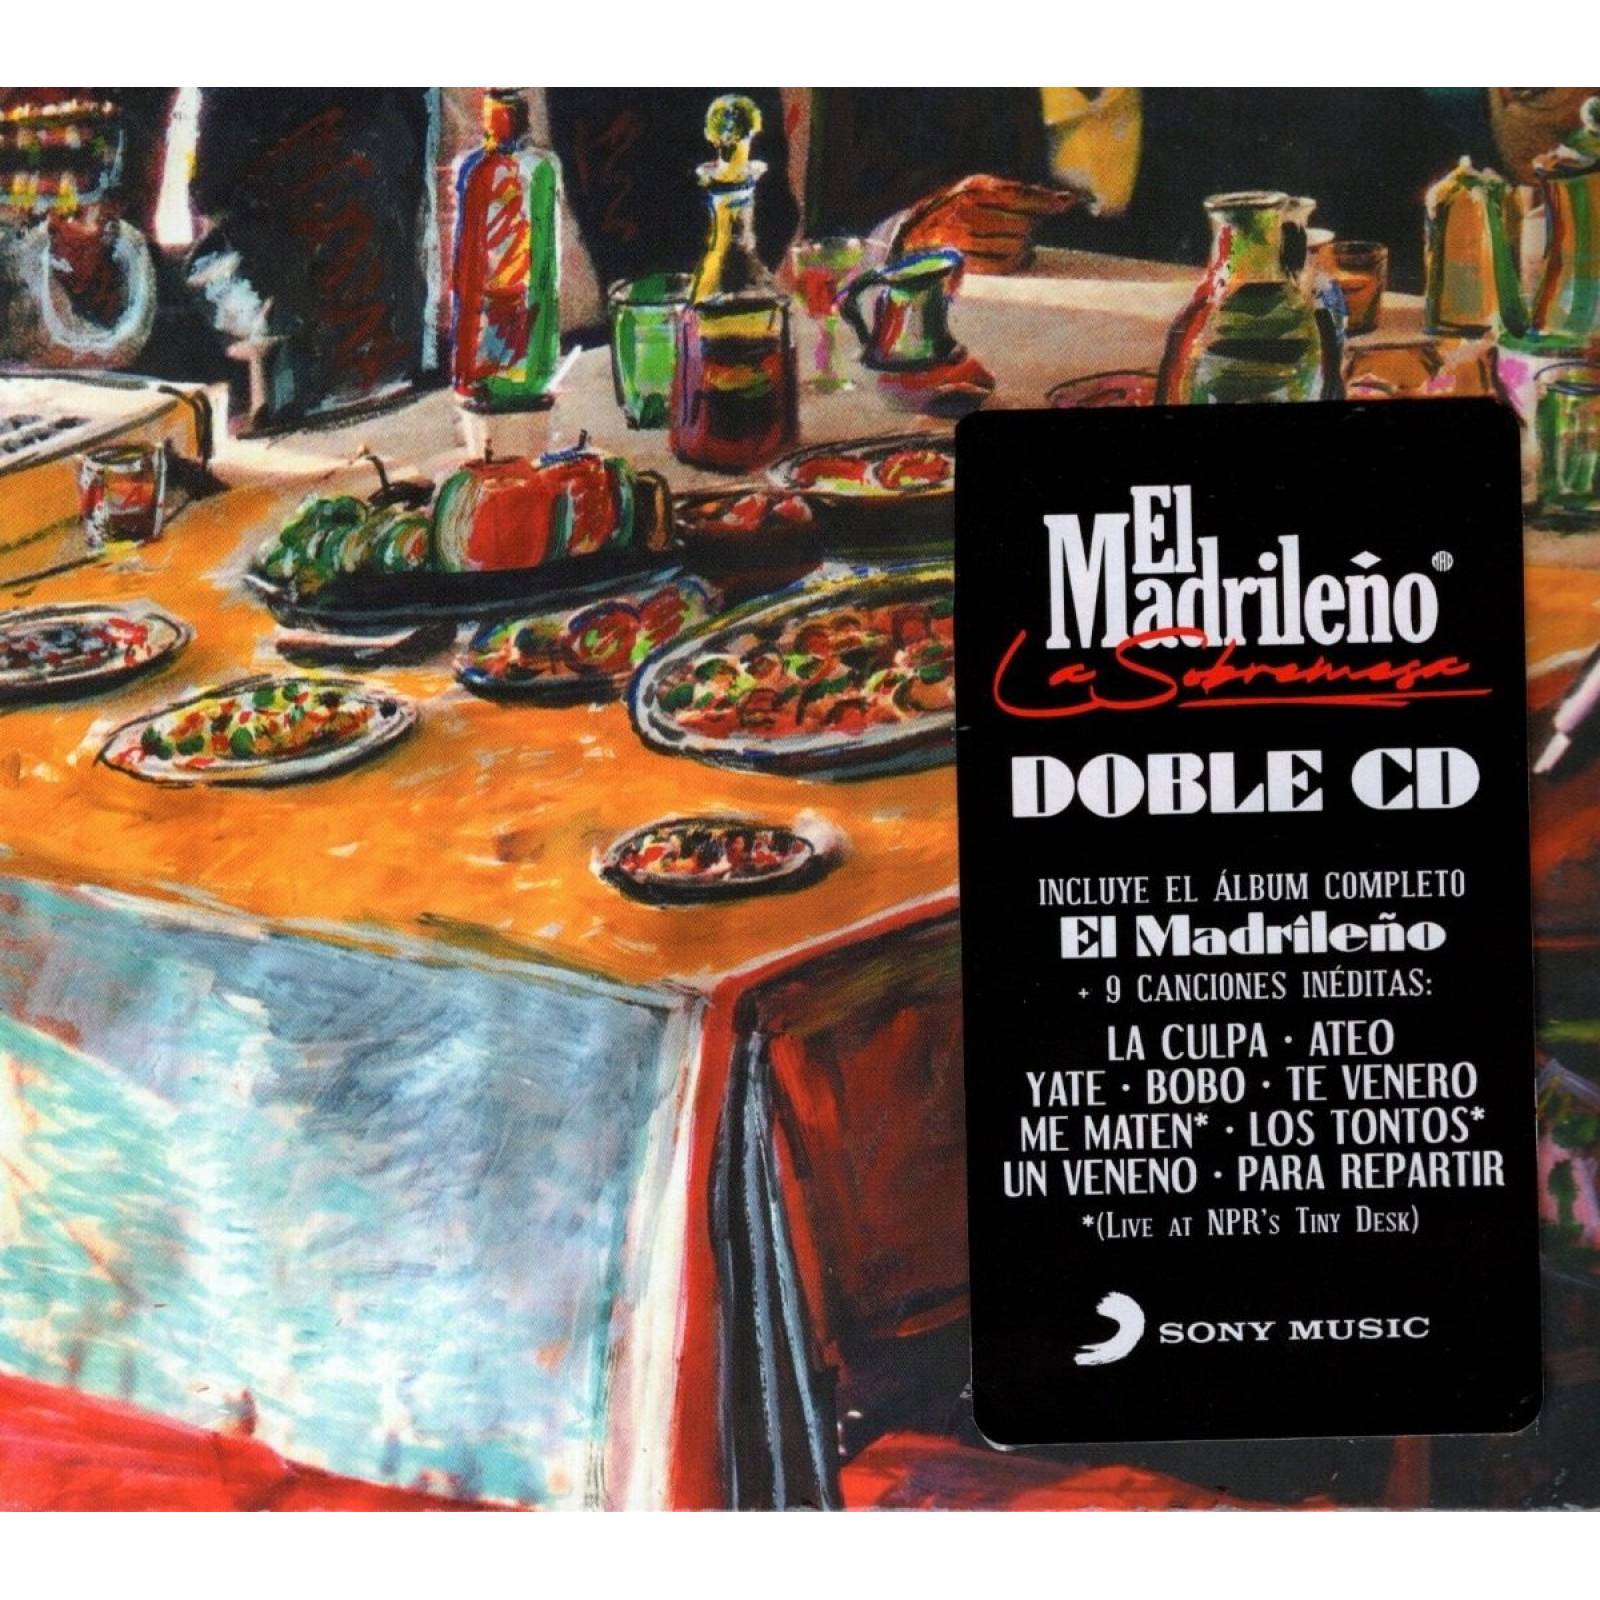 C. Tangana - El Madrileño La Sobremesa; CD Doble